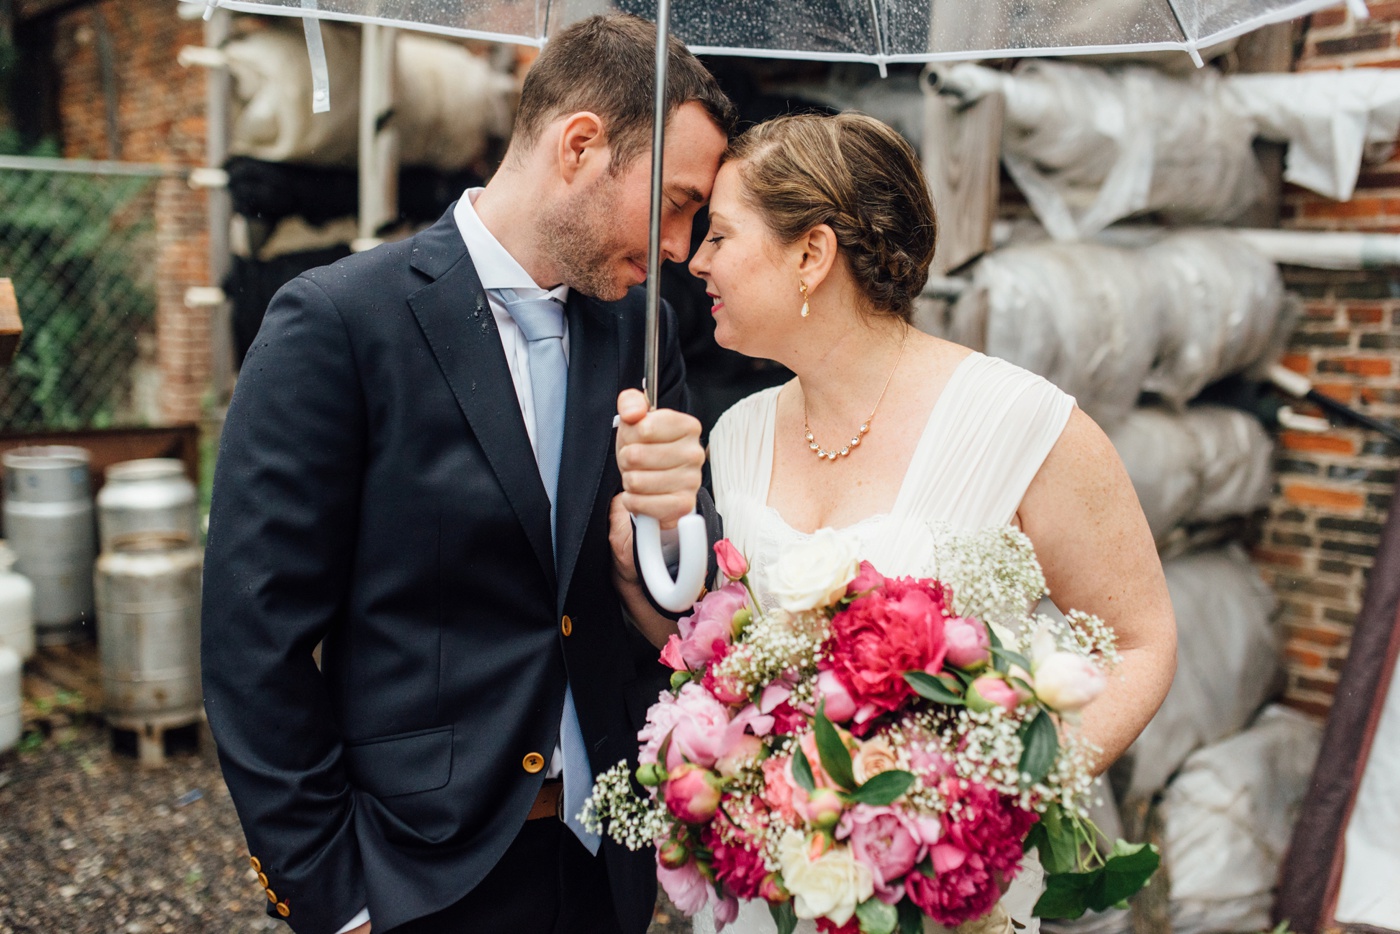 Rachael + Paul - Greensgrow Farms Wedding - Philadelphia Wedding Photographer - Alison Dunn Photography